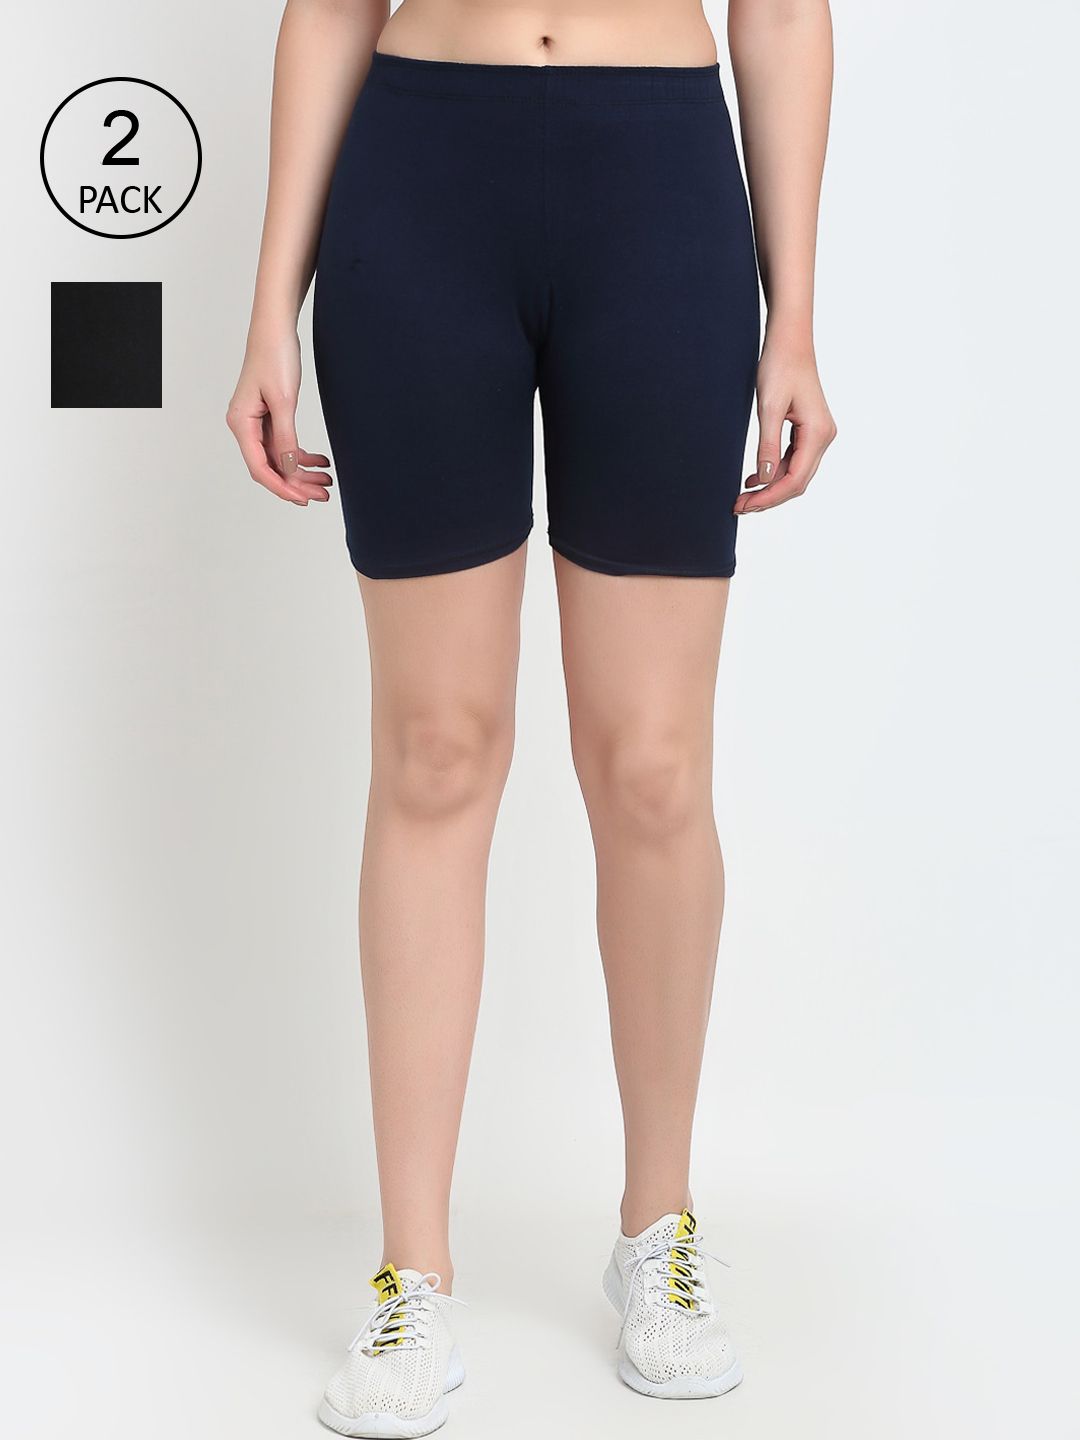 GRACIT Women Black & Navy Blue Set Of 2 Biker Shorts Price in India